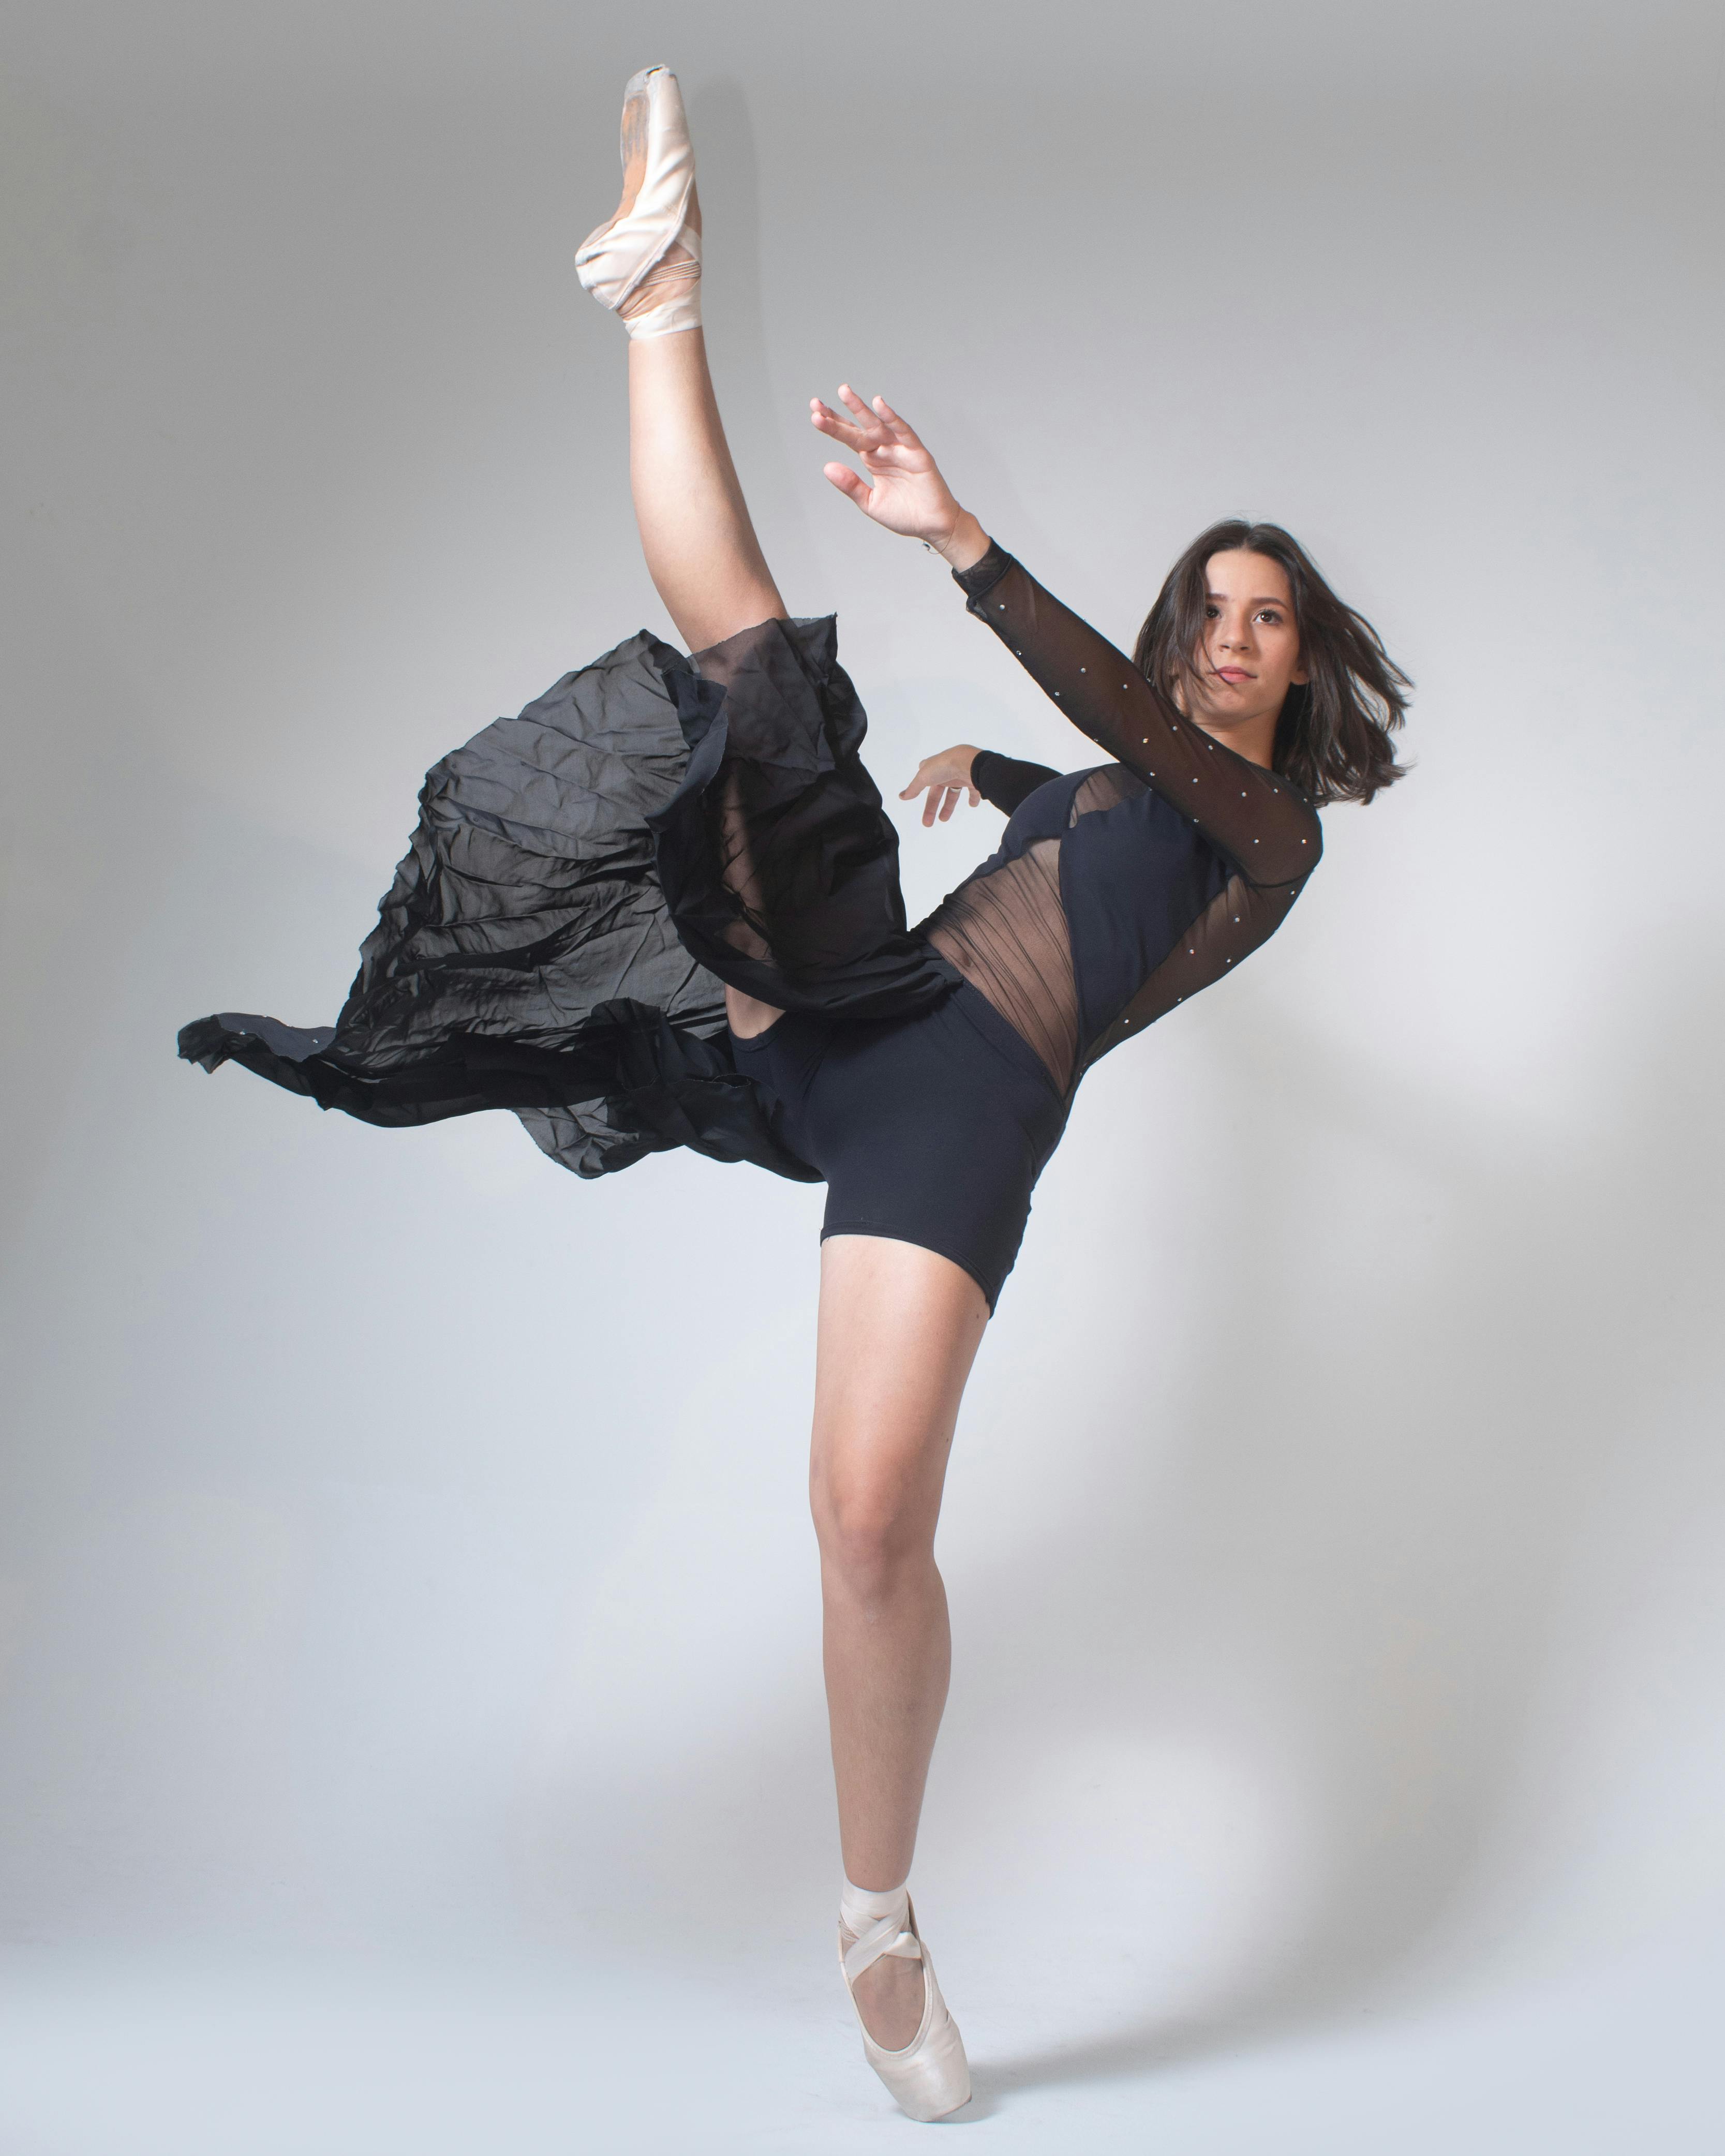 Ballet Dance PNG Picture, Ballet Dance Pose, Ballet, Dance, Dancing Posture  PNG Image For Free Download